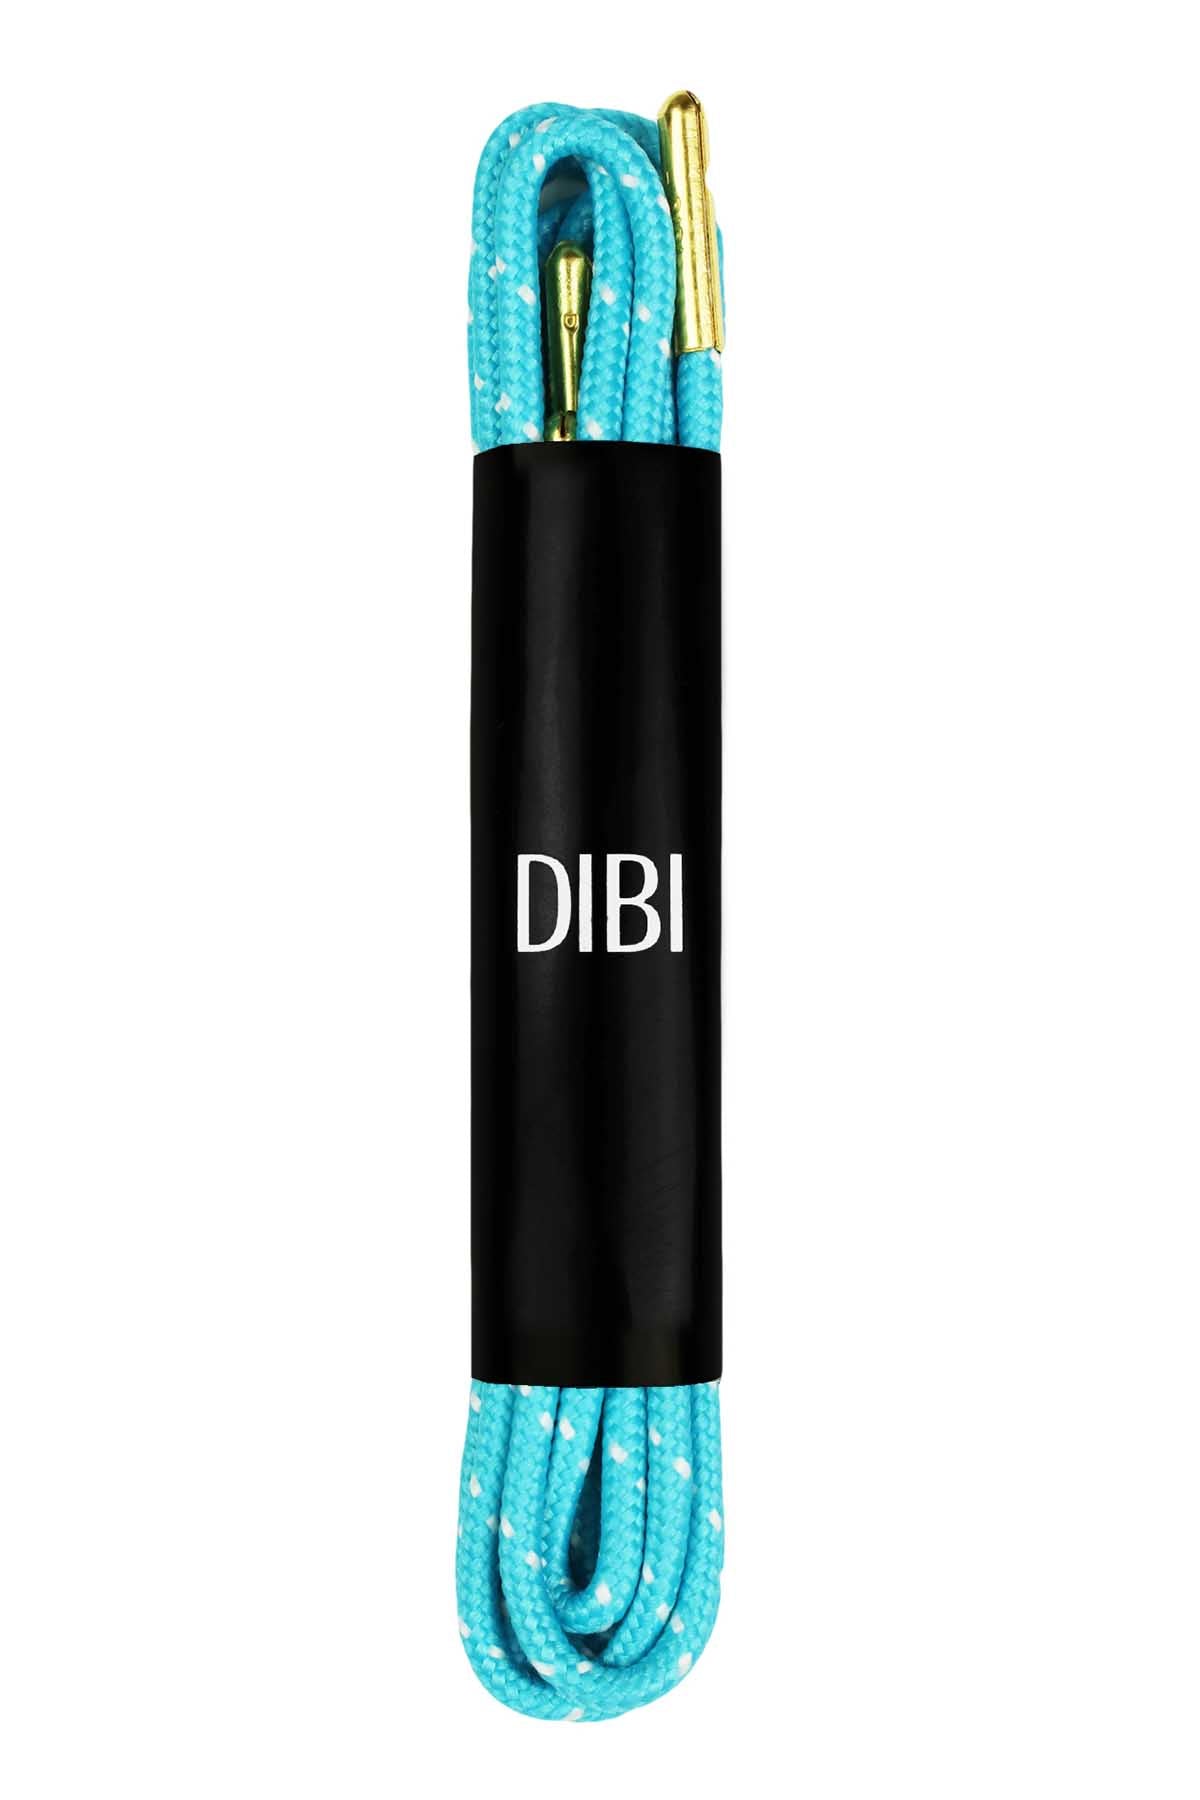 DIBI Bright-Blue Polkadot Dress Shoelaces w/ Gold Aglets